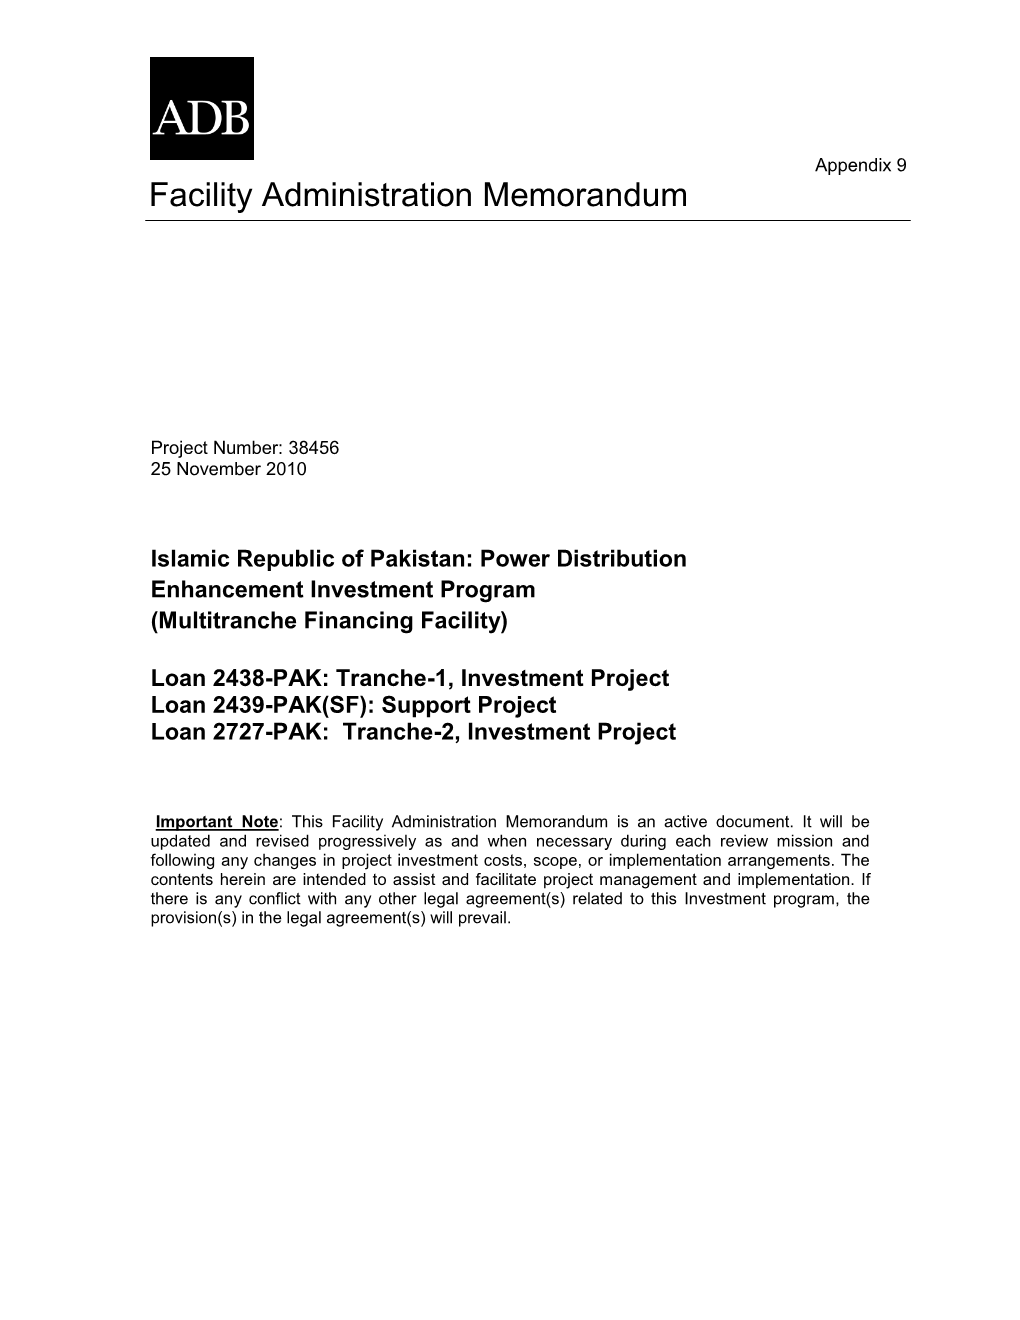 Pakistan: Power Distribution Enhancement (Tranche 2)